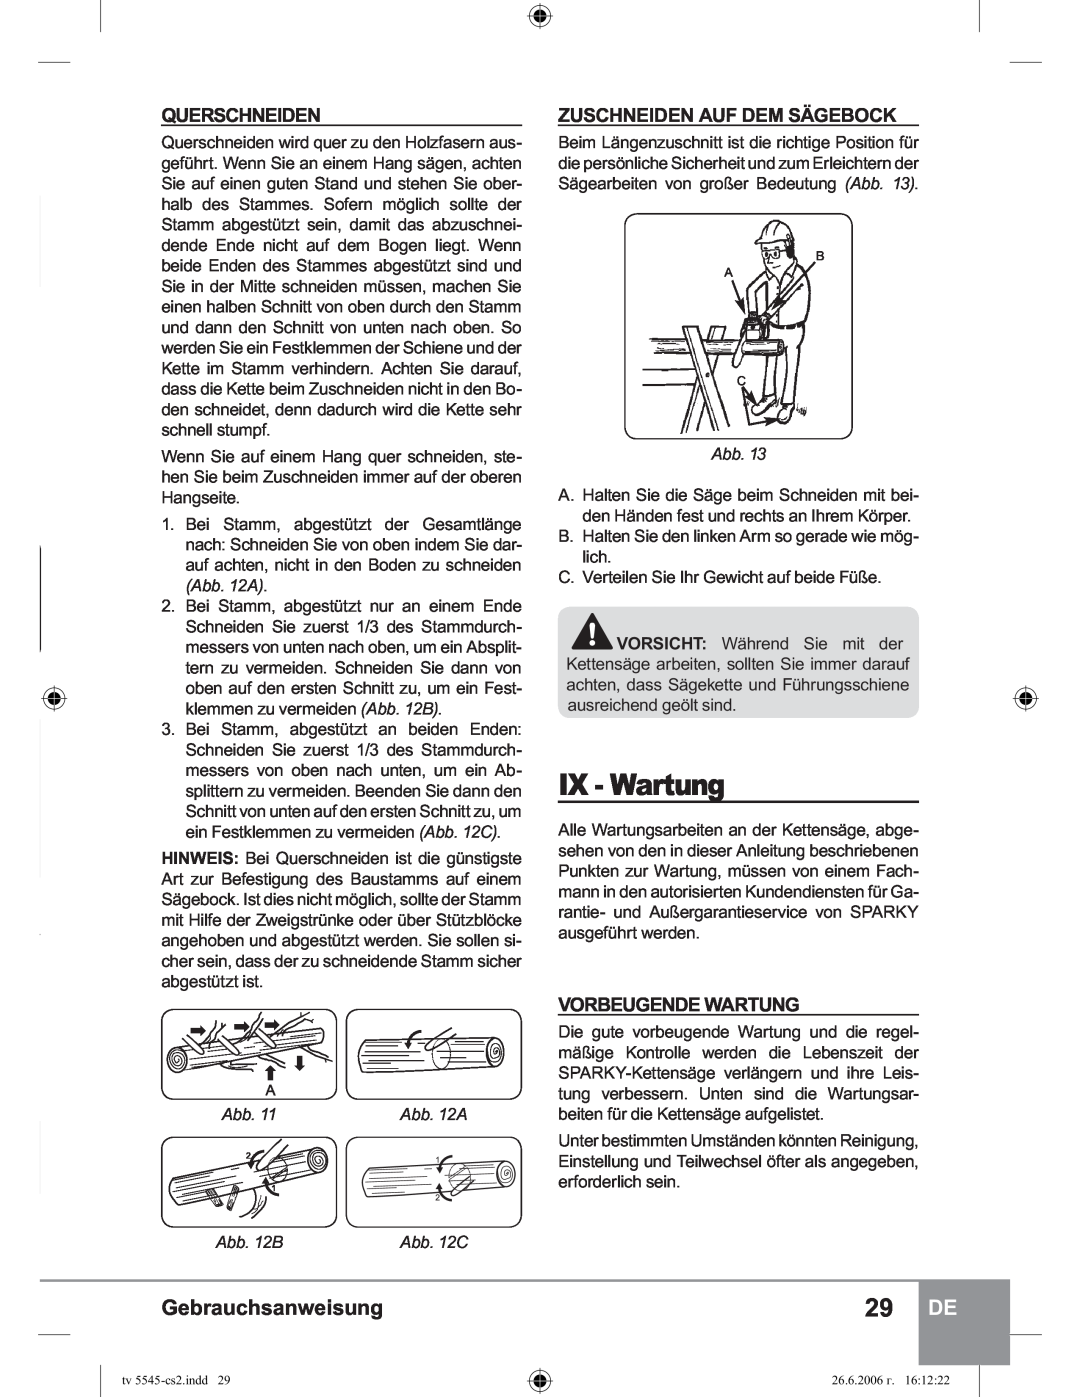 Sparky Group TV 5545 manual IX - Wartung,  Querschneiden, Zuschneiden Auf Dem Sägebock, Vorbeugende Wartung, Abb. 12B 